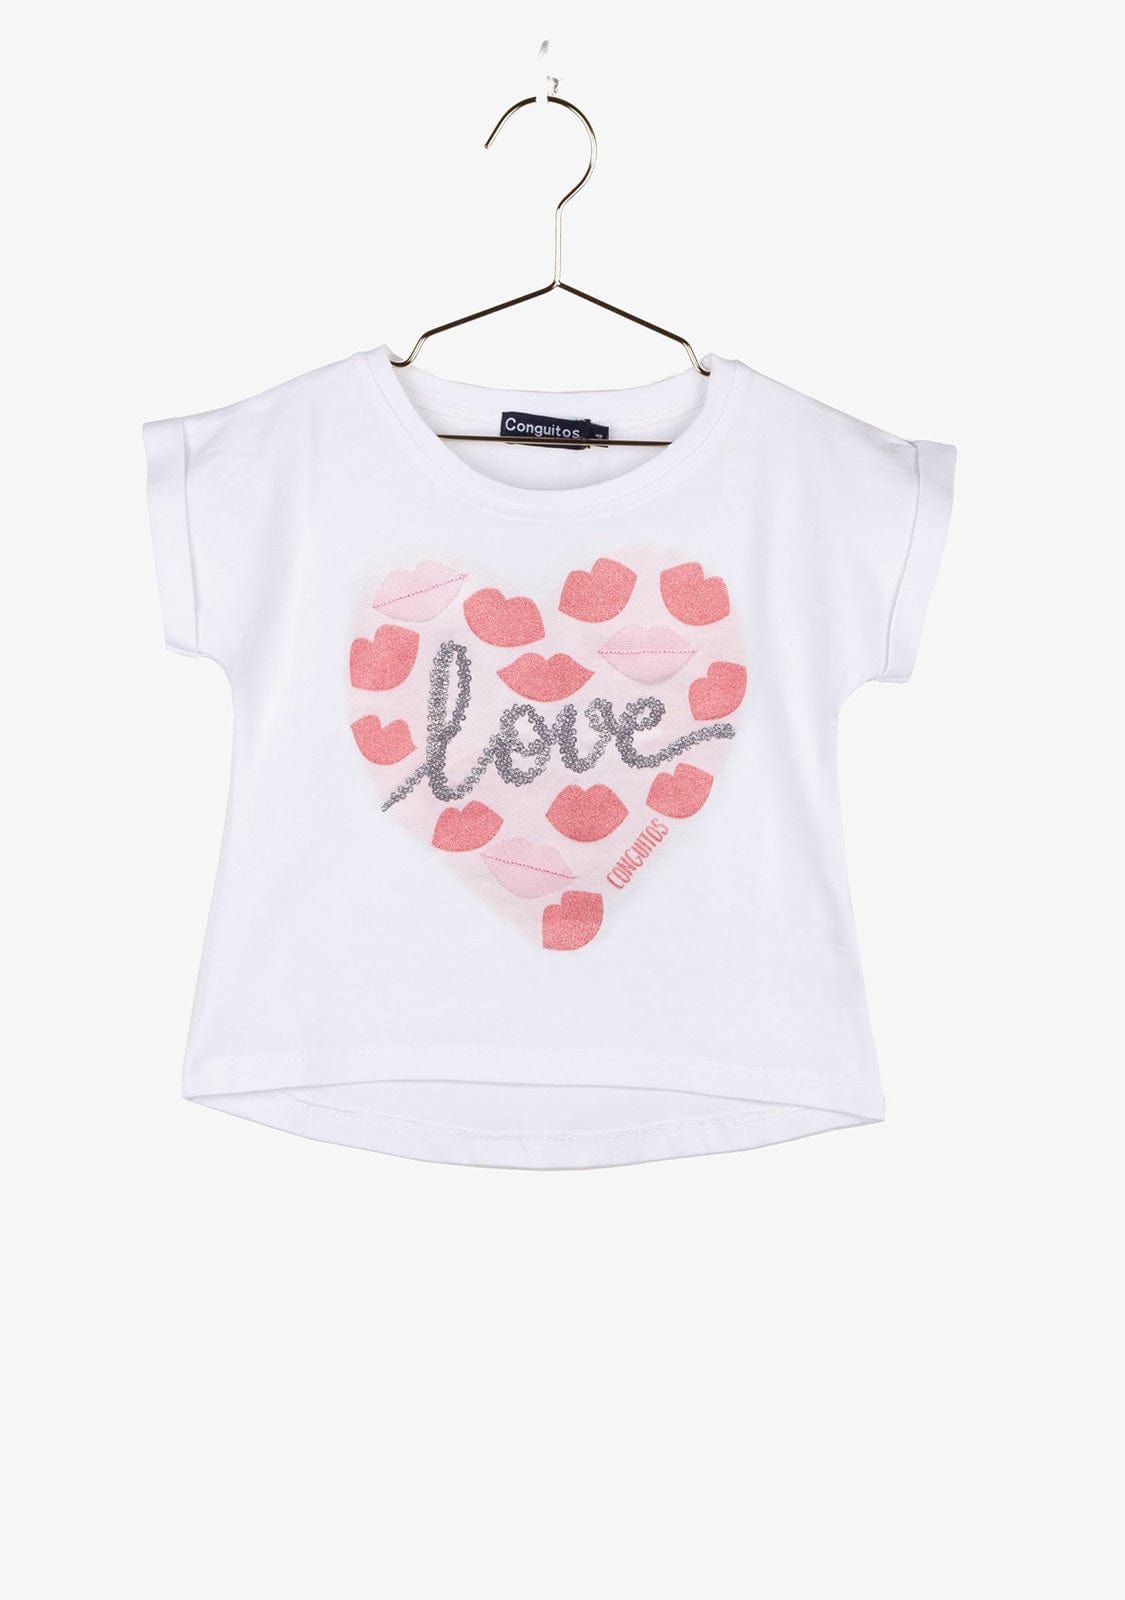 CONGUITOS TEXTIL Clothing Girl's "Love Kiss" White T-Shirt